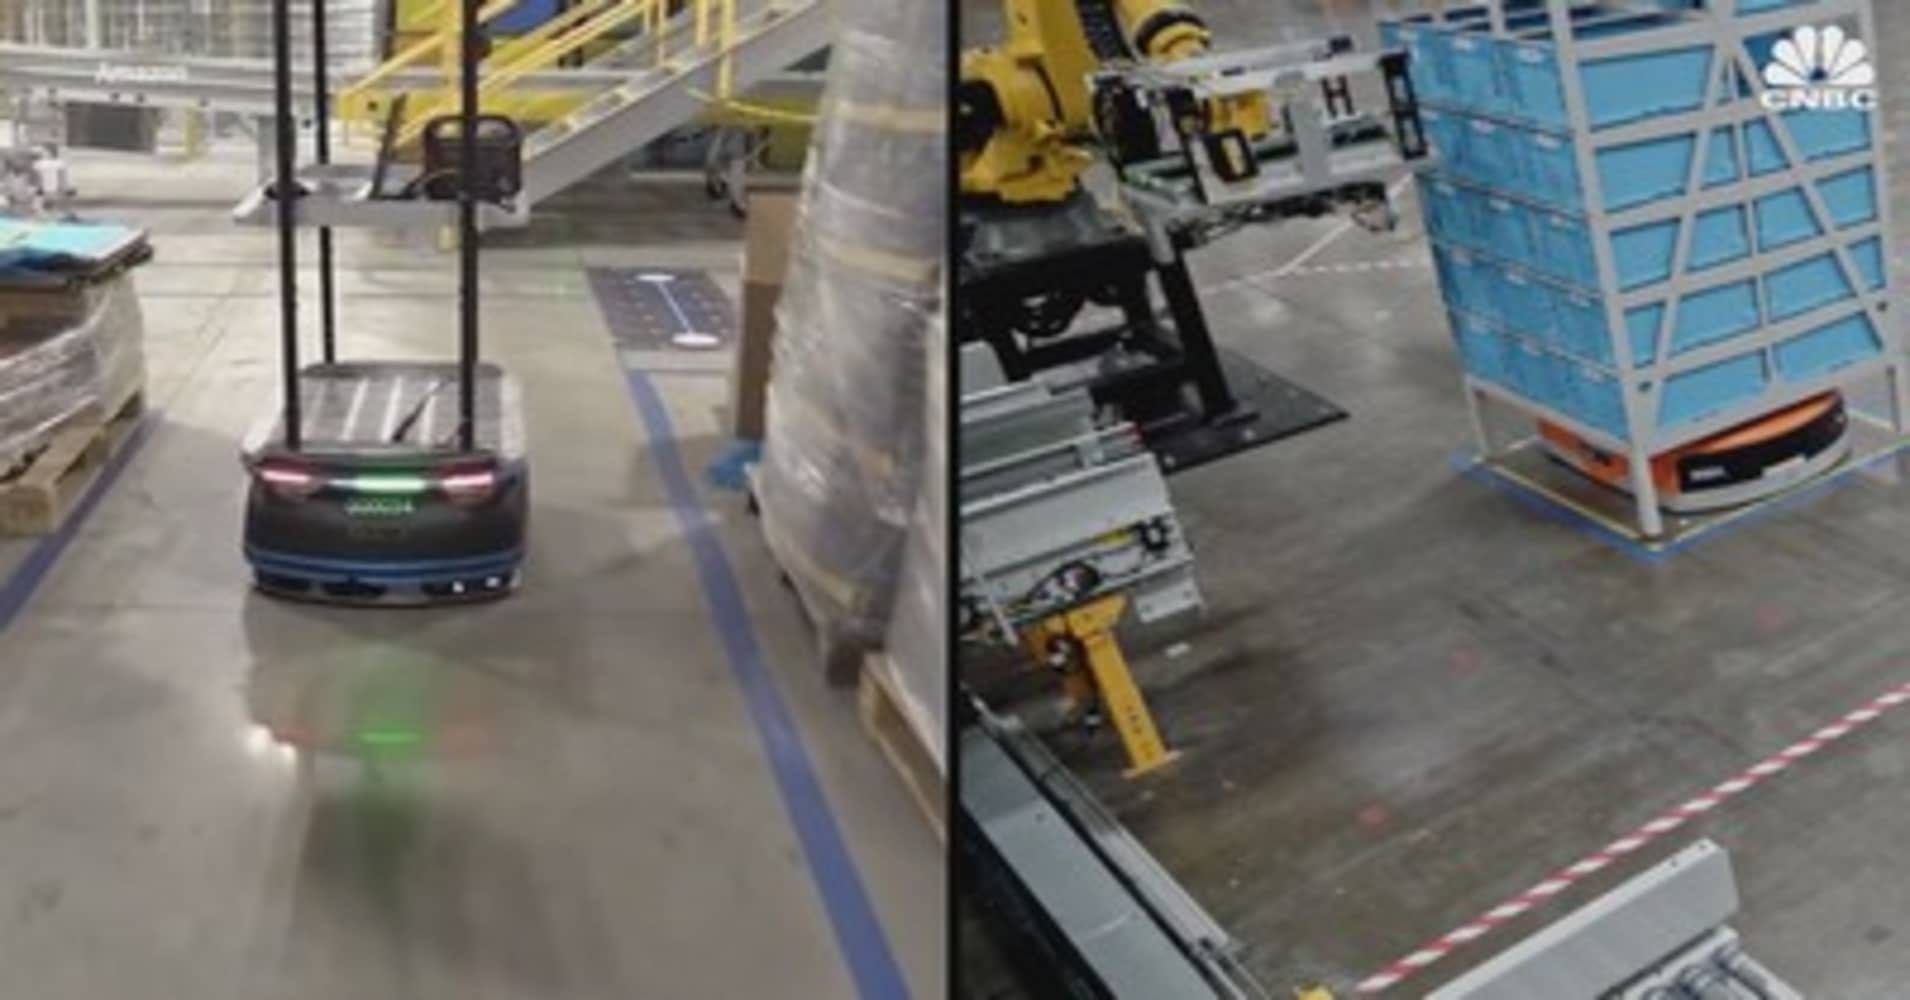 Amazon details new warehouse robots, 'Ernie' and 'Bert'